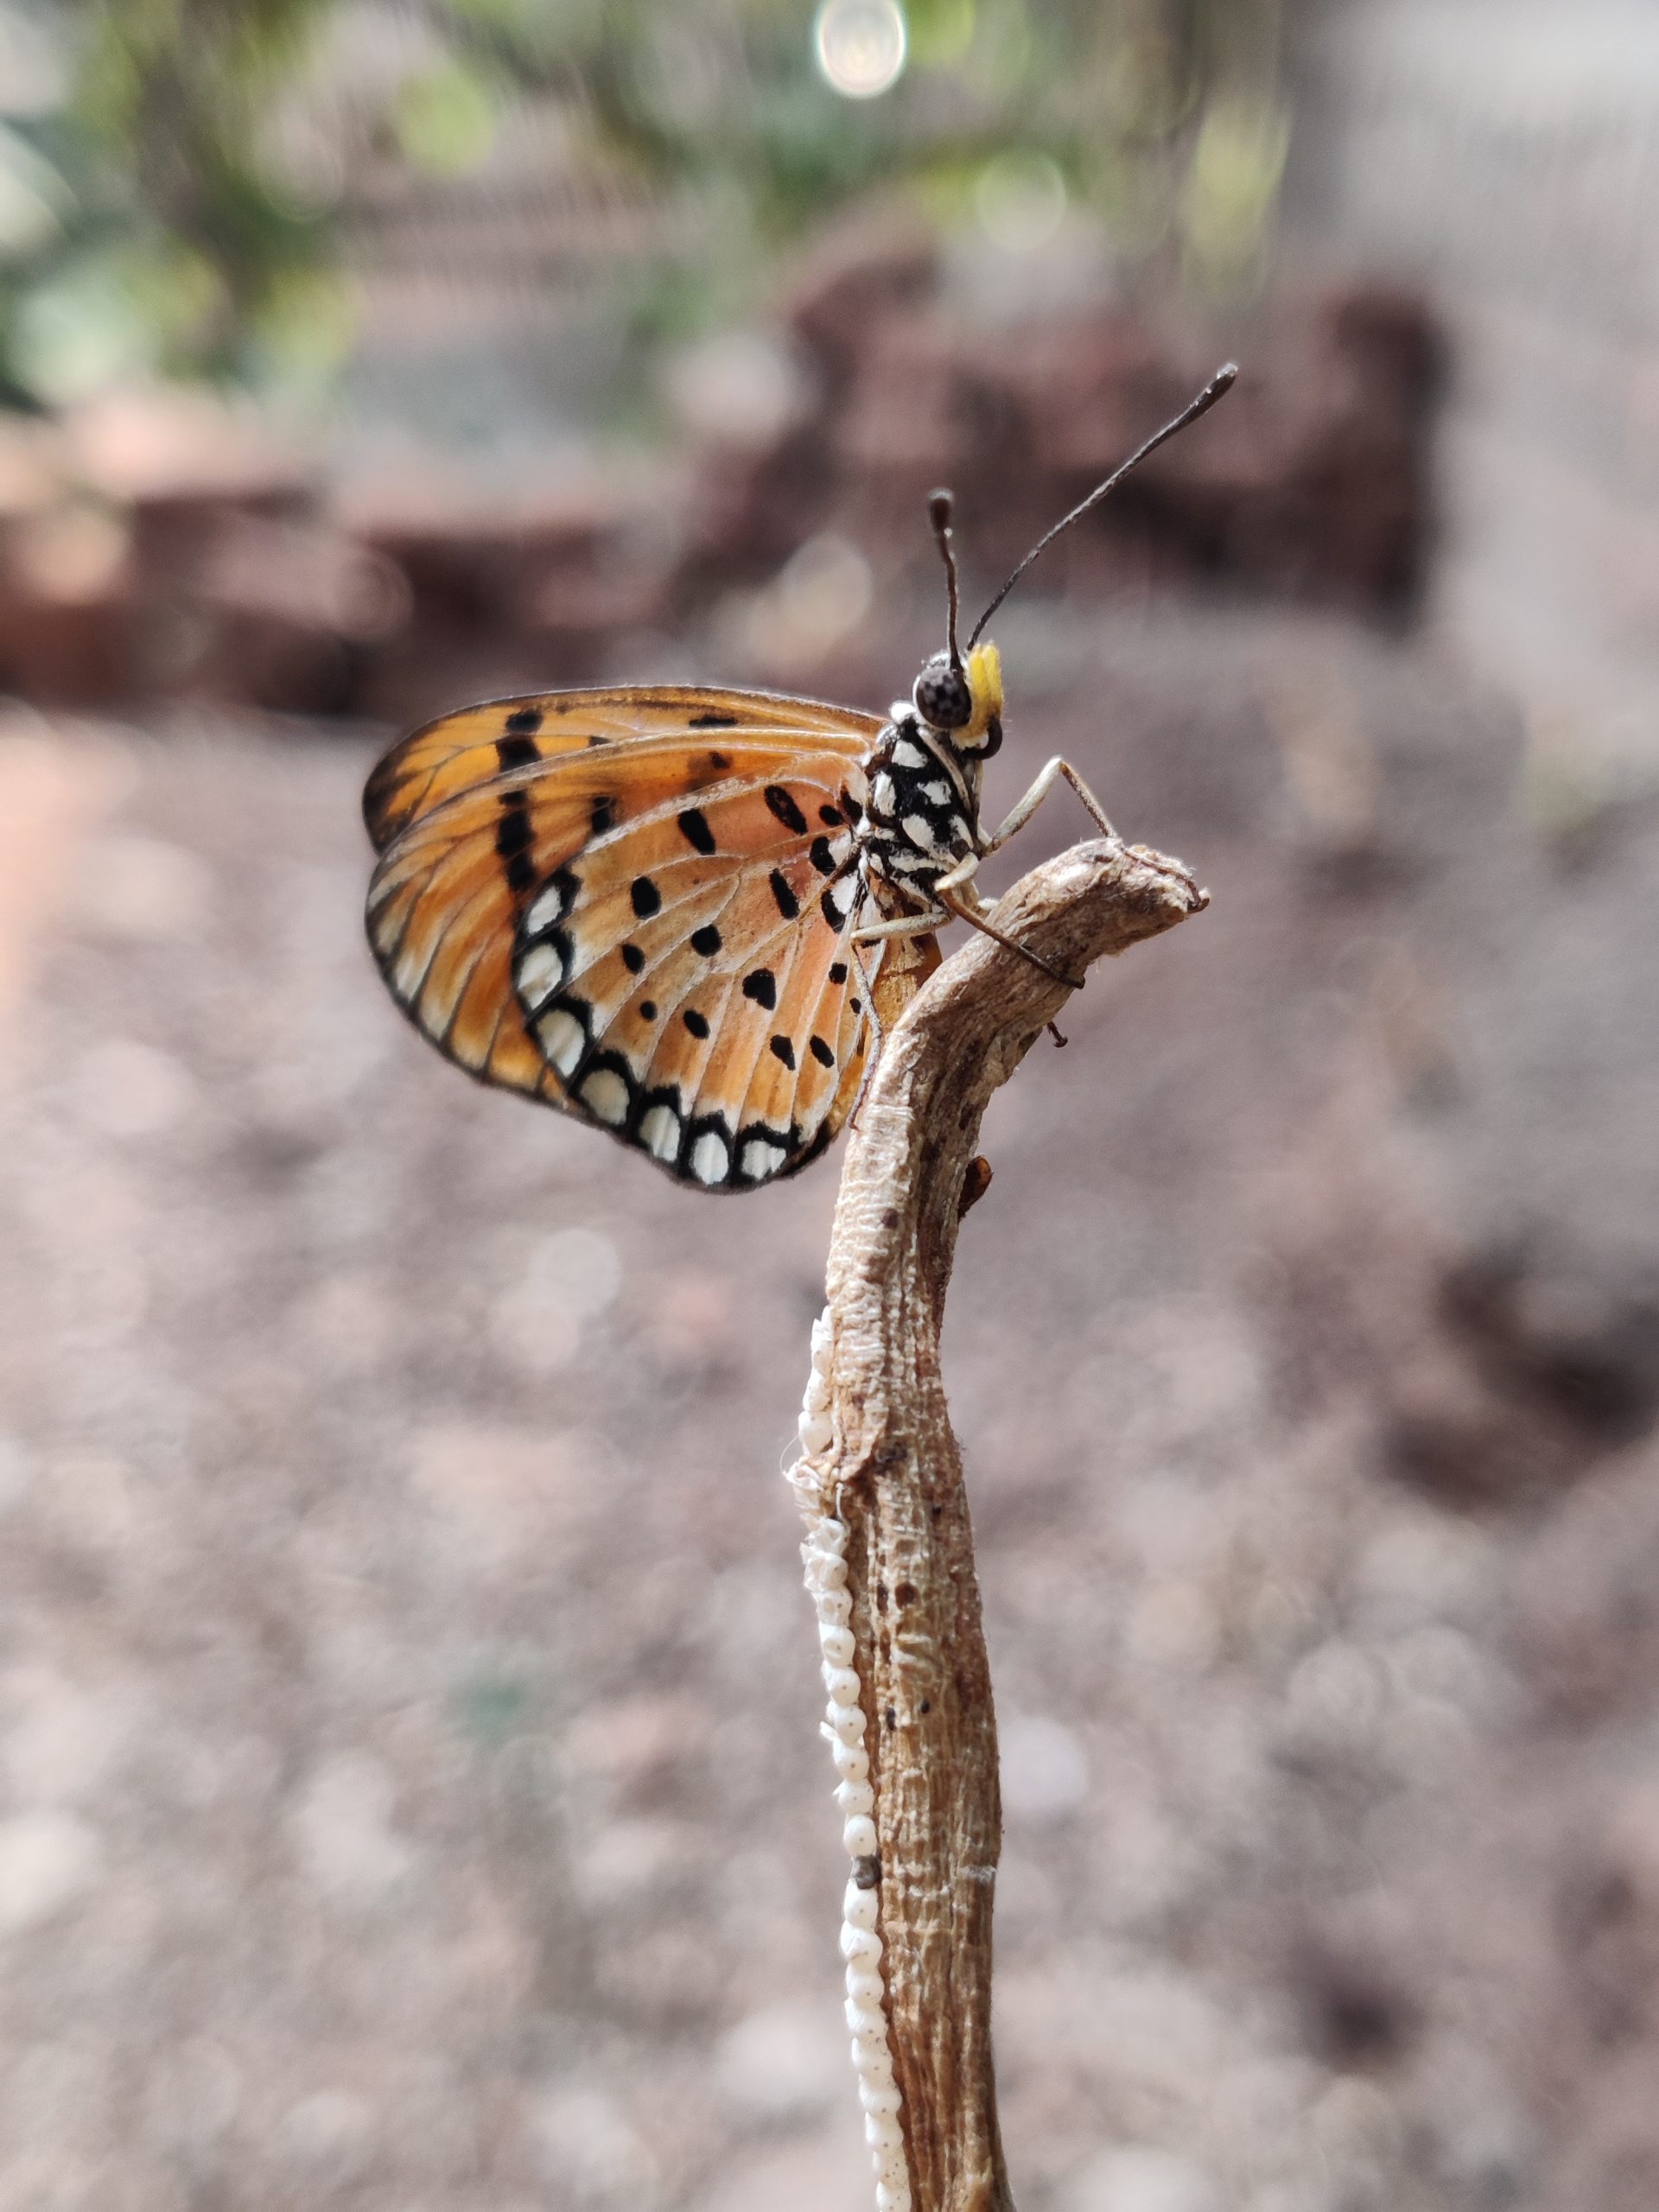 Butterfly on plant stem